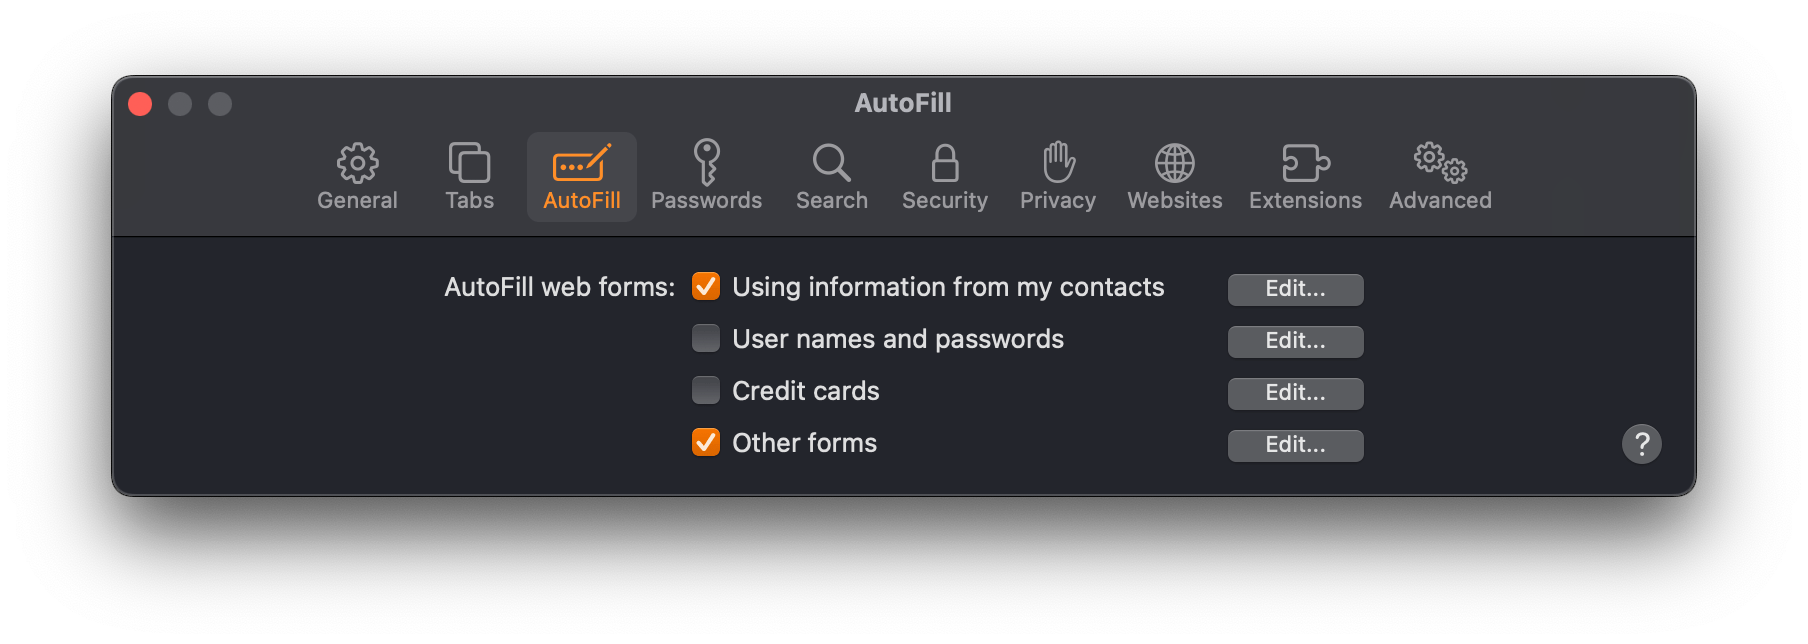 Safari autofill settings panel.